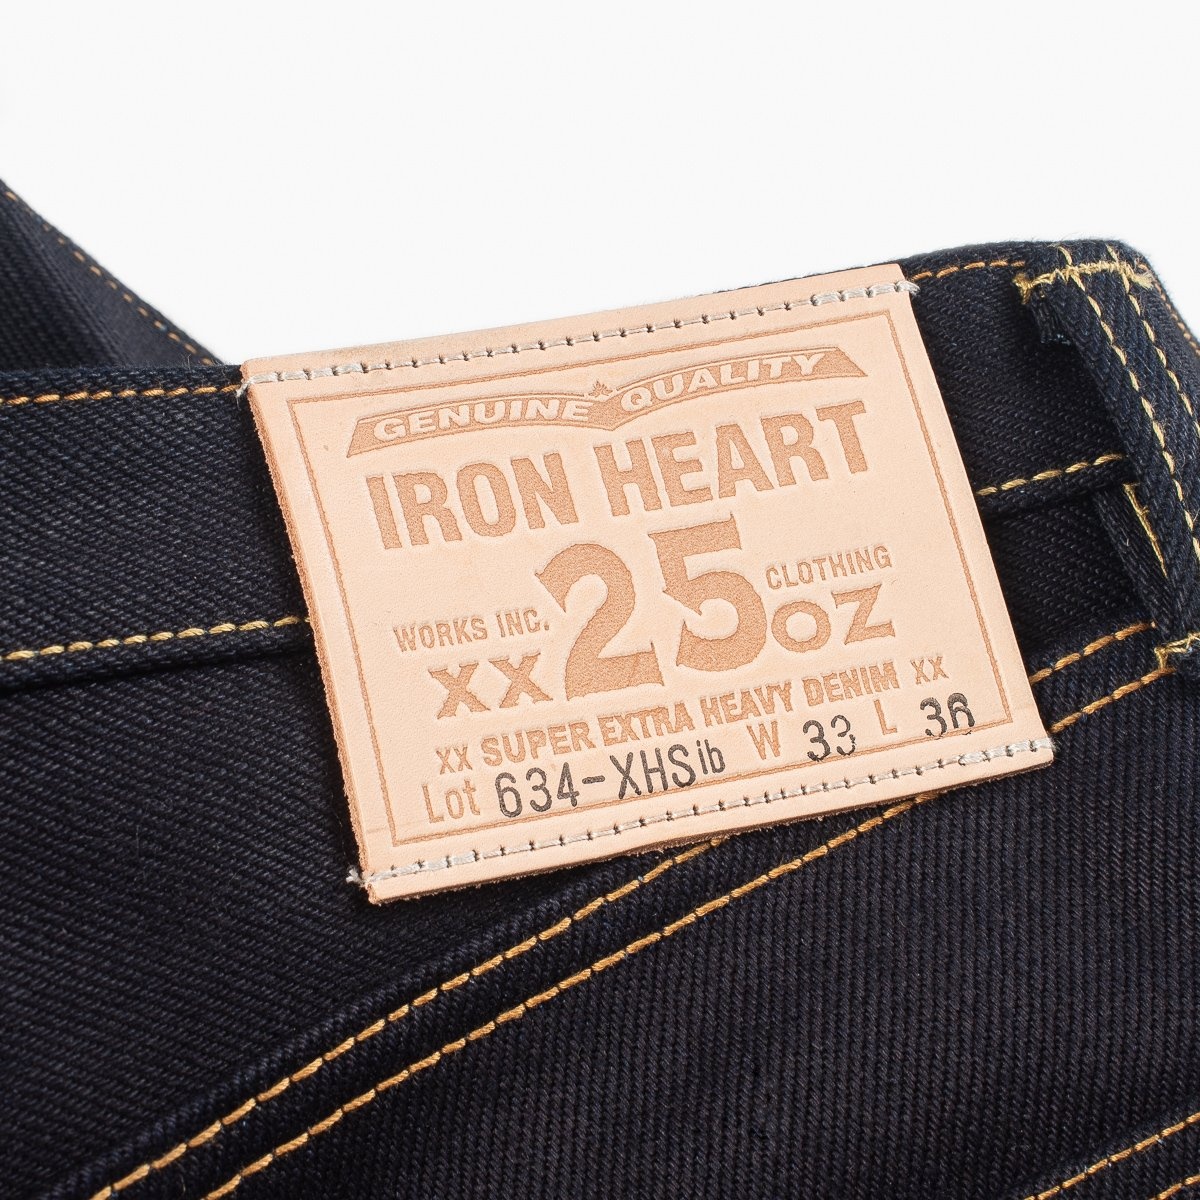 IH-634-XHSib 25oz Selvedge Denim Straight Cut Jeans - Indigo/Black - 8